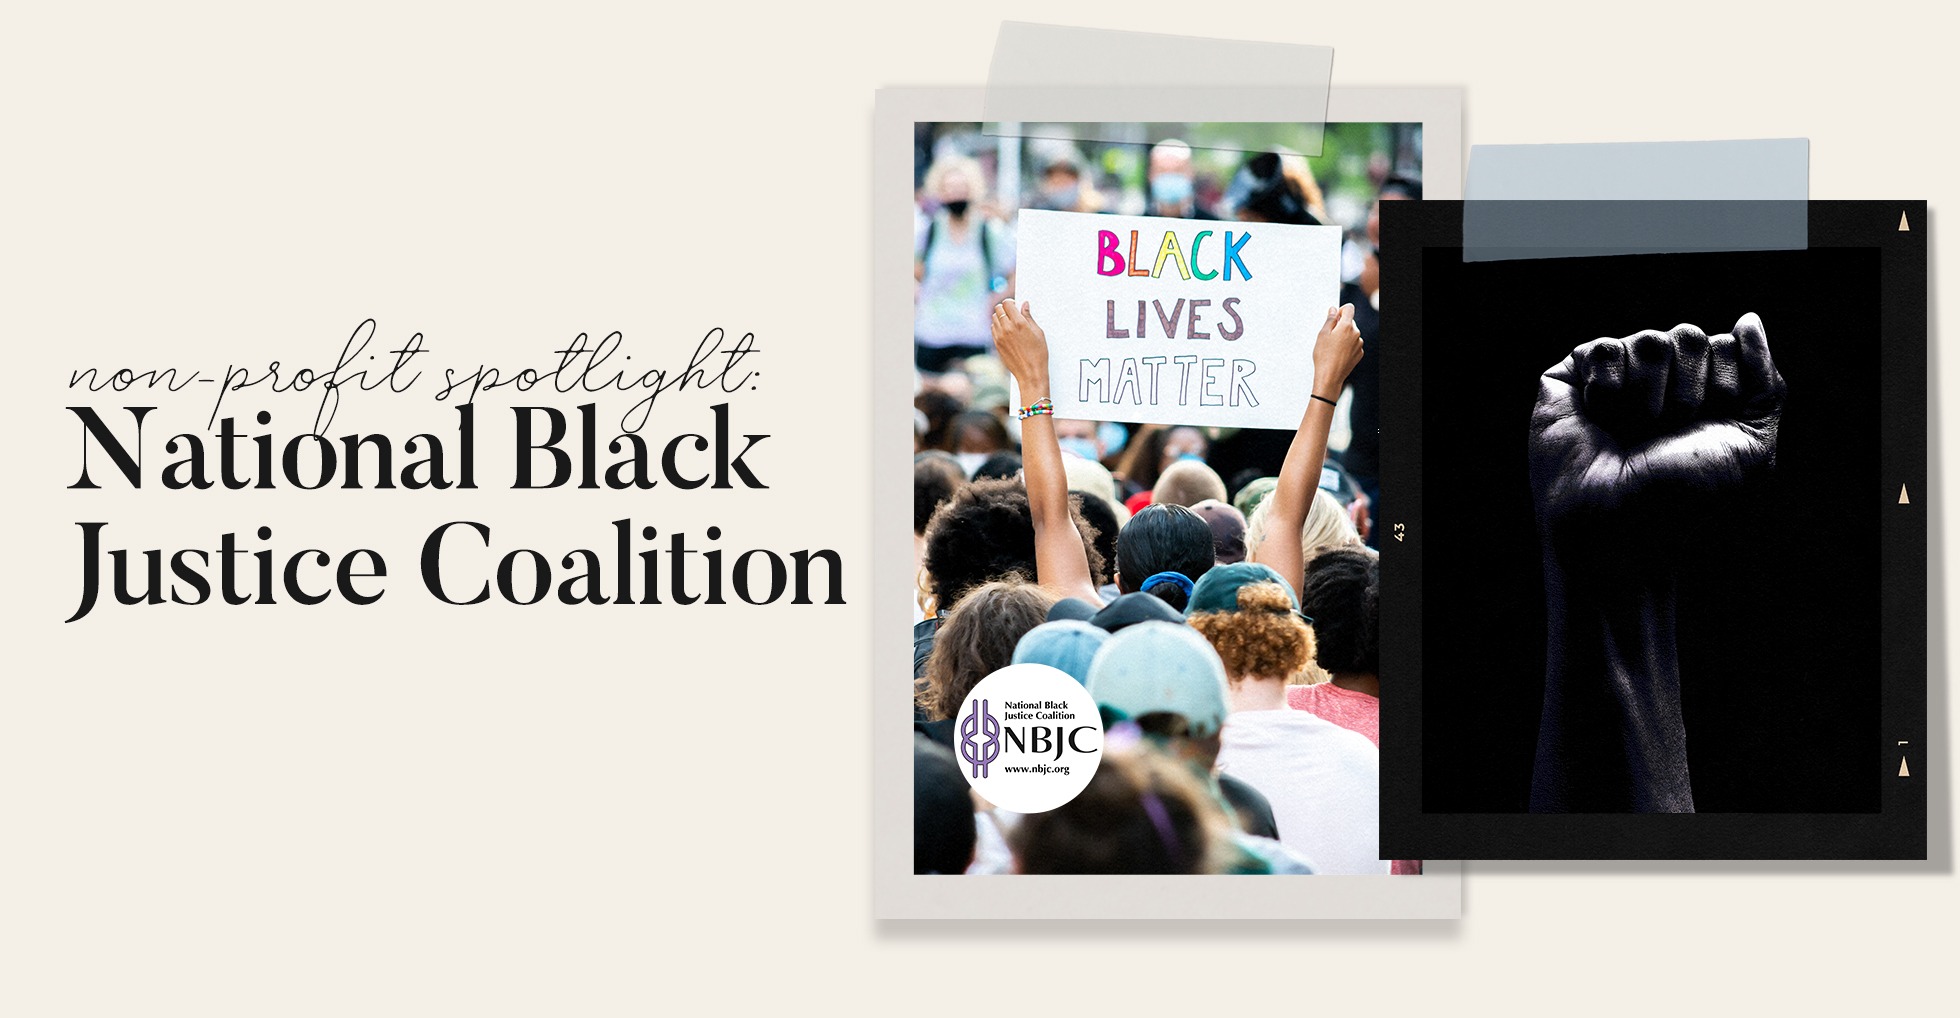 National Black Justice Coalition: Nonprofit Spotlight